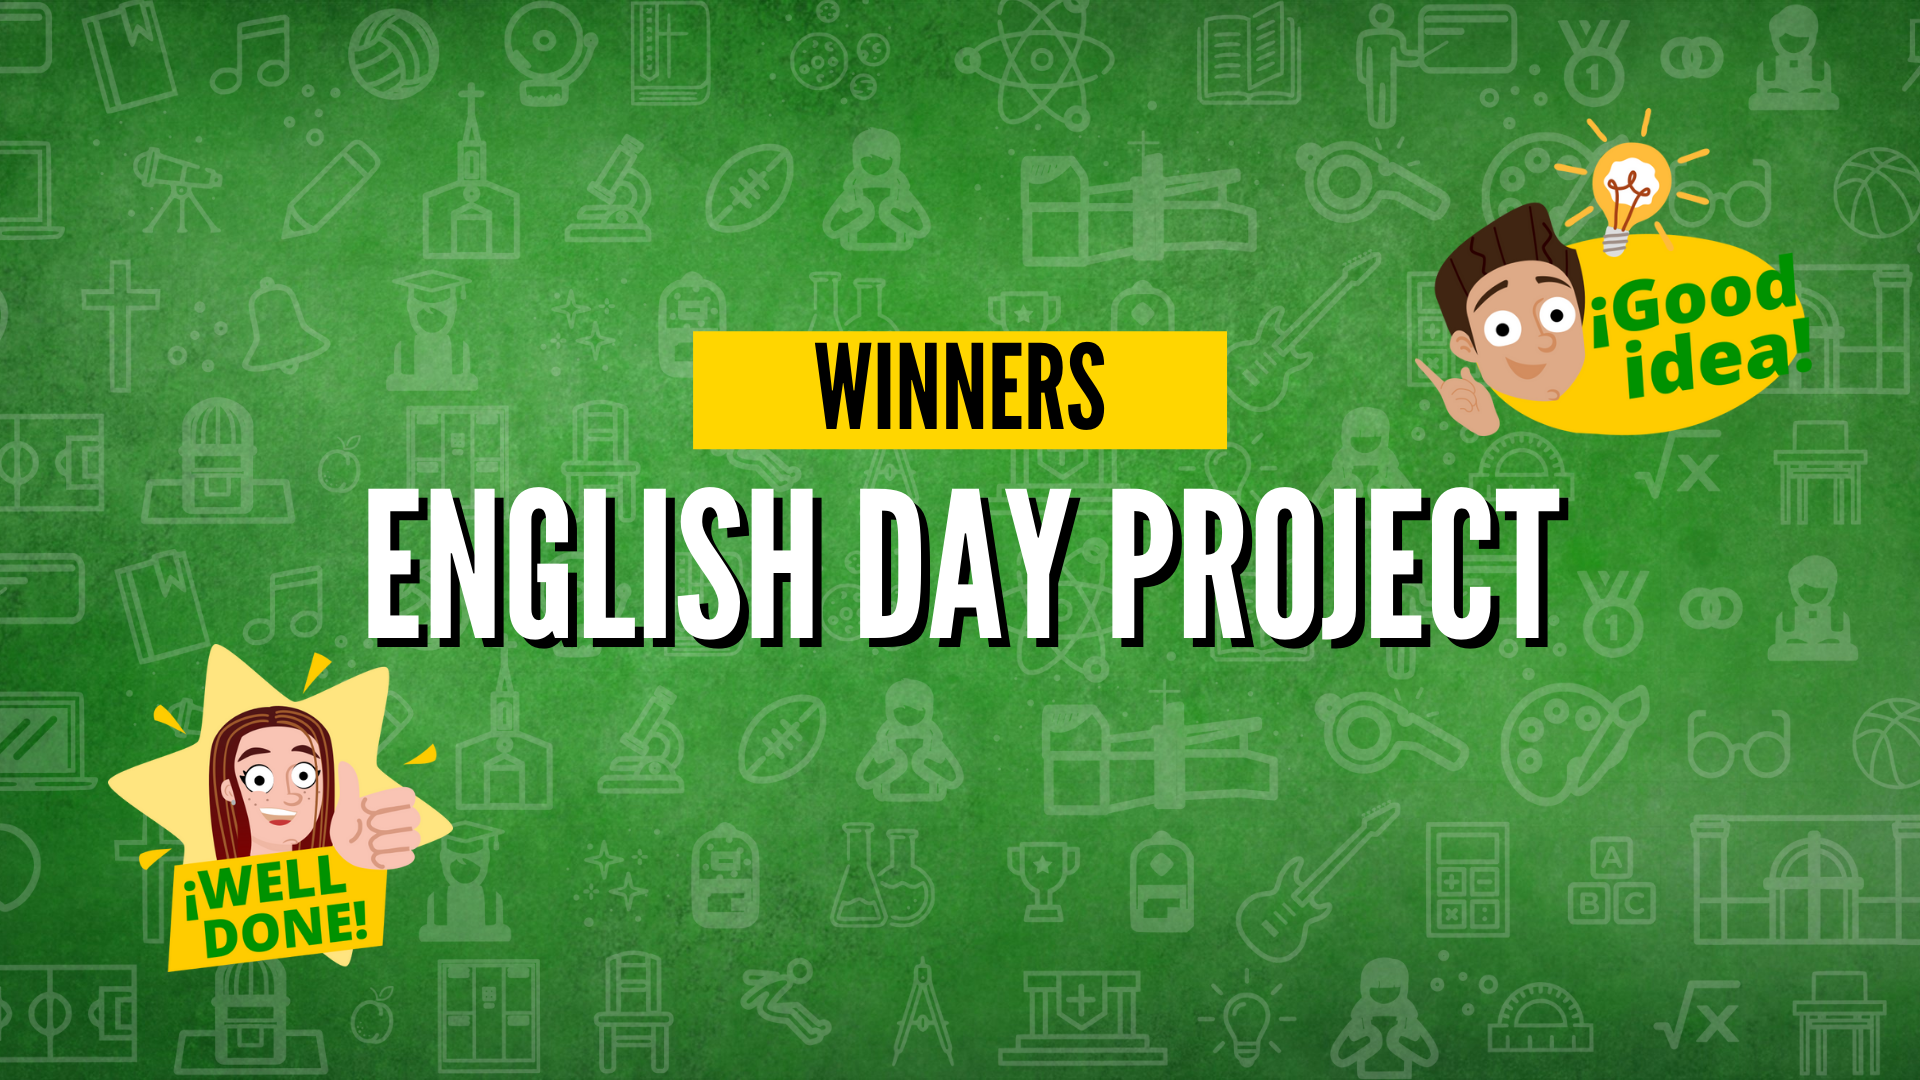 ENGLISH DAY PROJECT WINNERS